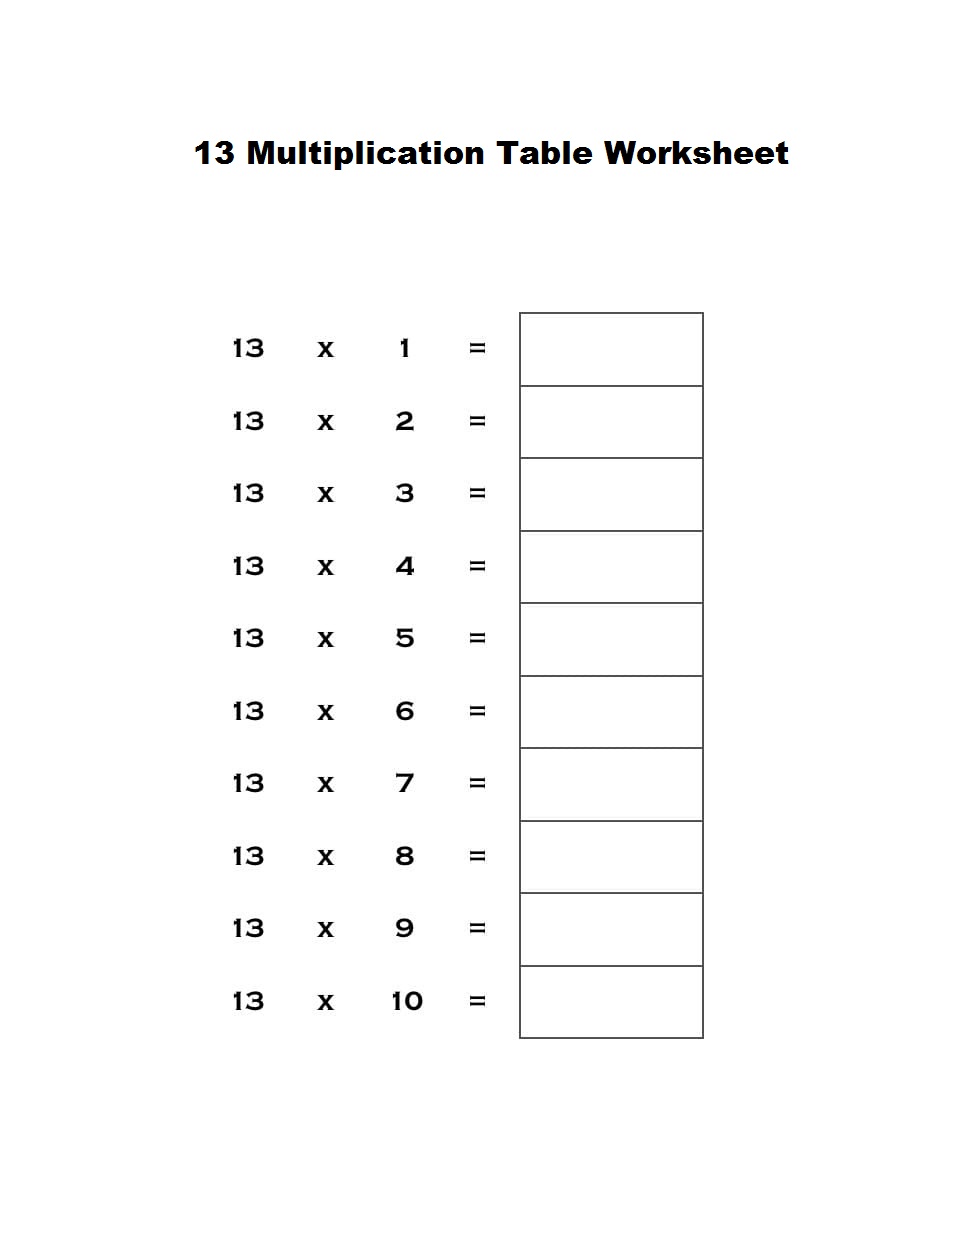 13 Multiplication Table Worksheet